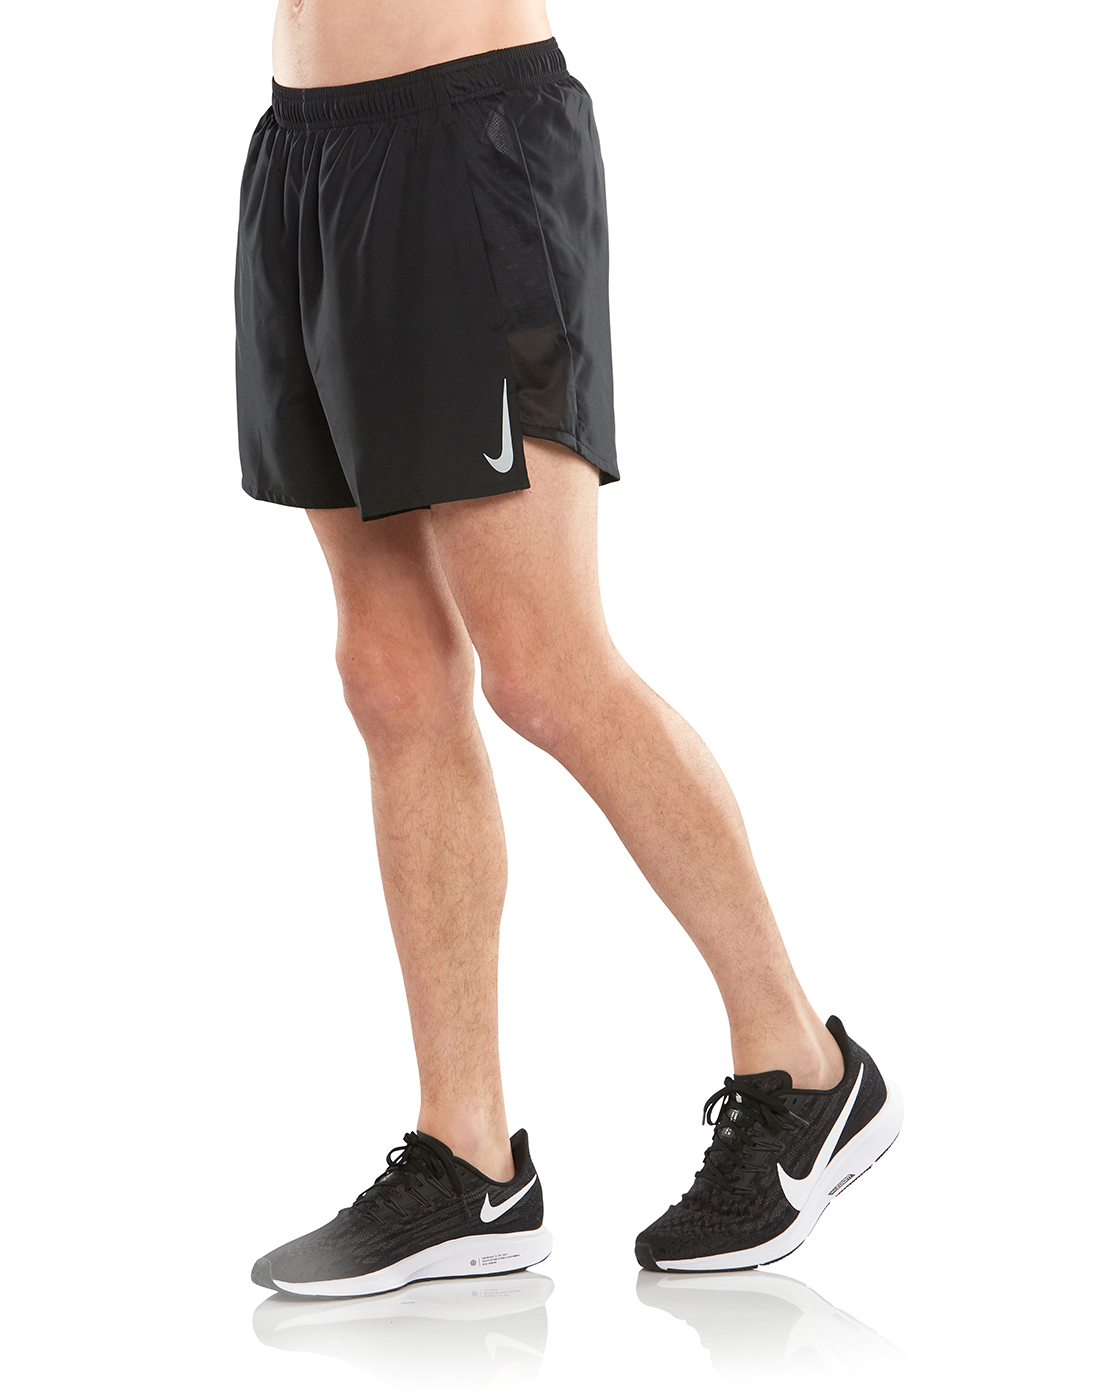 nike running challenger 7 inch shorts in black